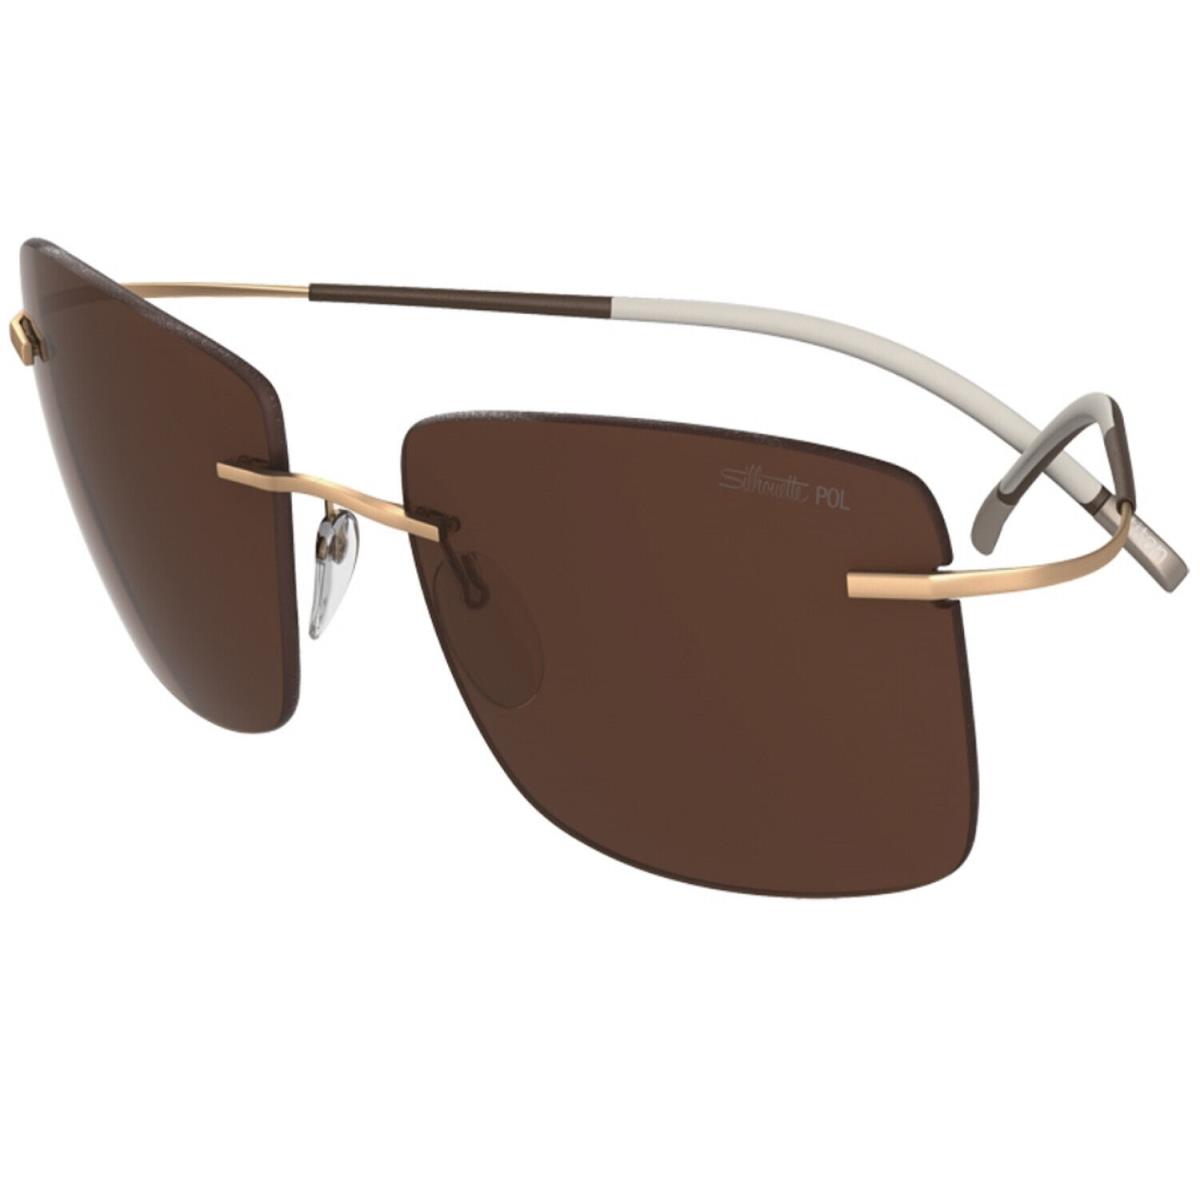 Silhouette Sunglasses Tma Icon 59/18/138 Gold Polarized 8691/20-6201